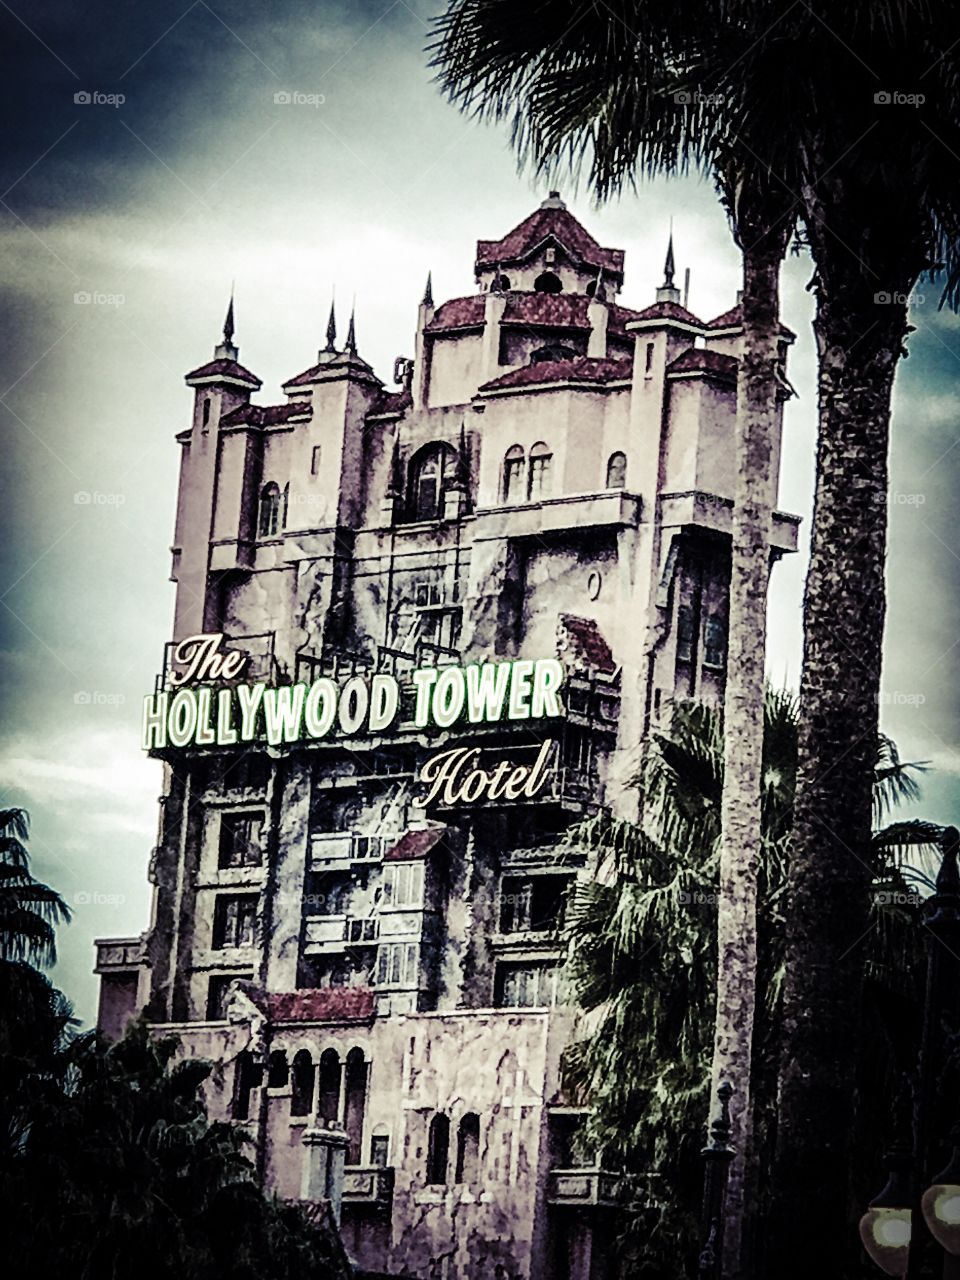 Twilight Zone Tower of Terror at Disney's Hollywood Studios at Disney World near Orlando Florida. 